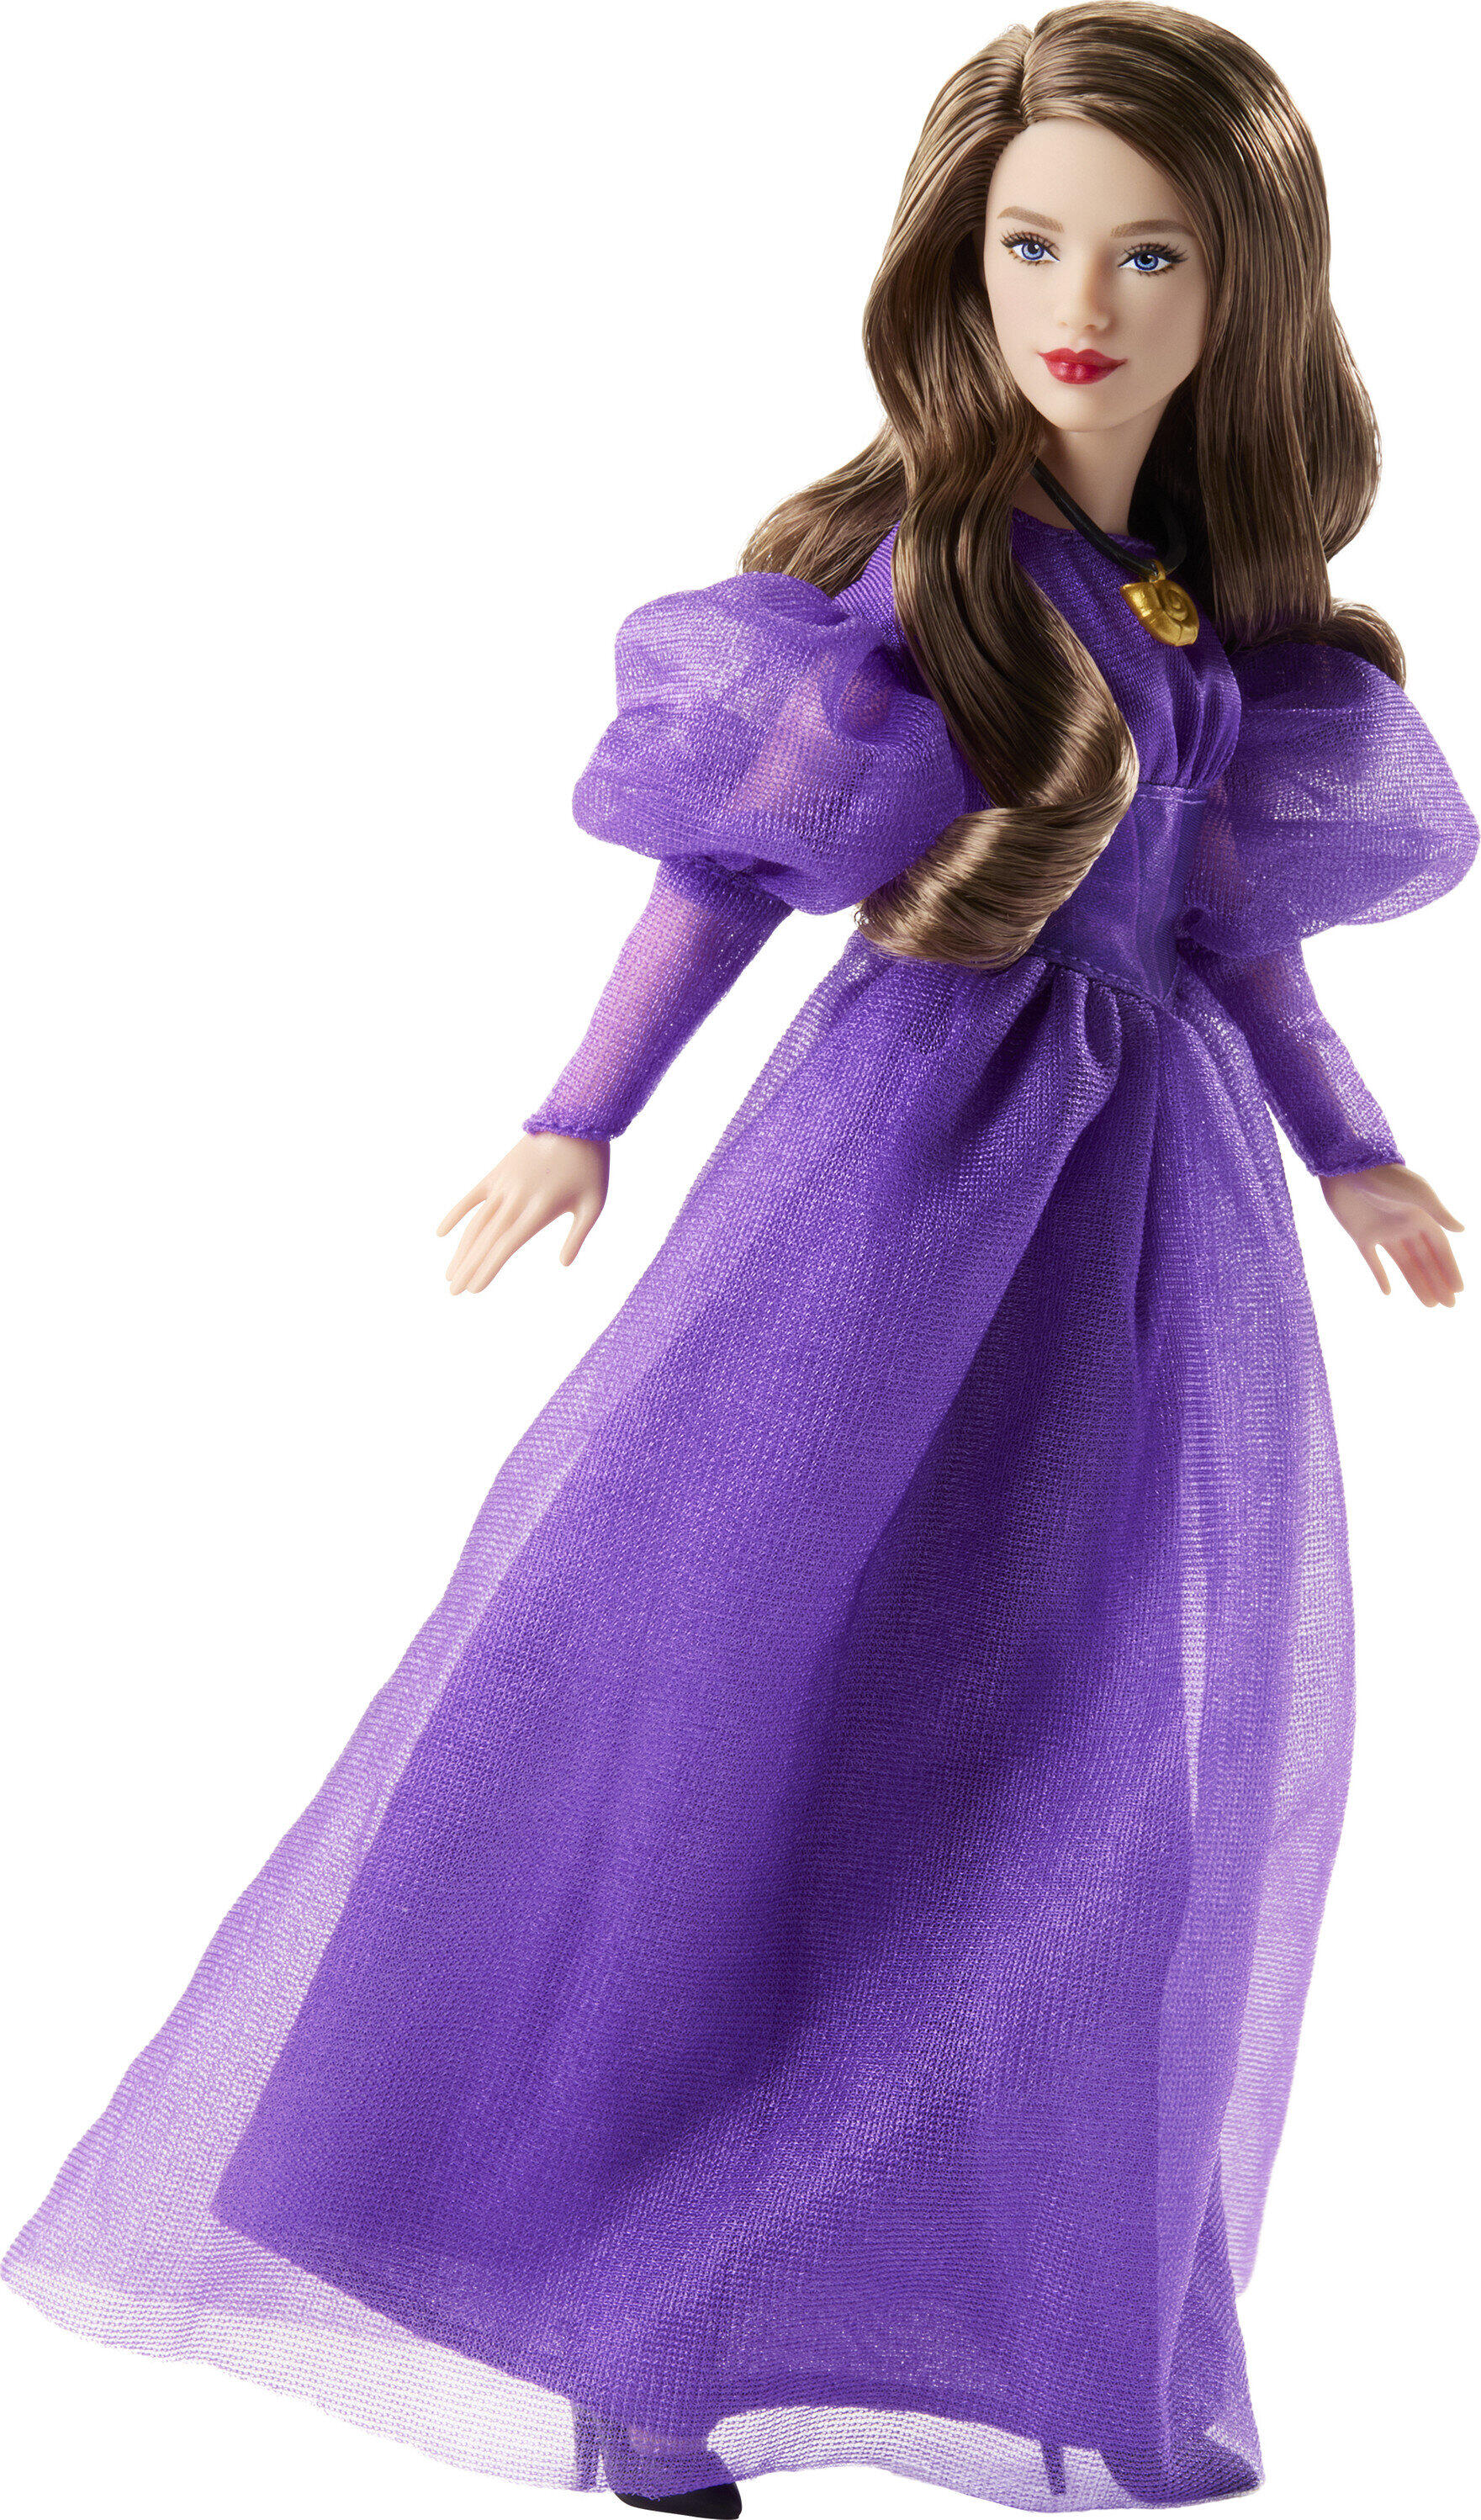 Disney The Little Mermaid Vanessa Fashion Doll in Signature Purple Dress - image 4 of 6